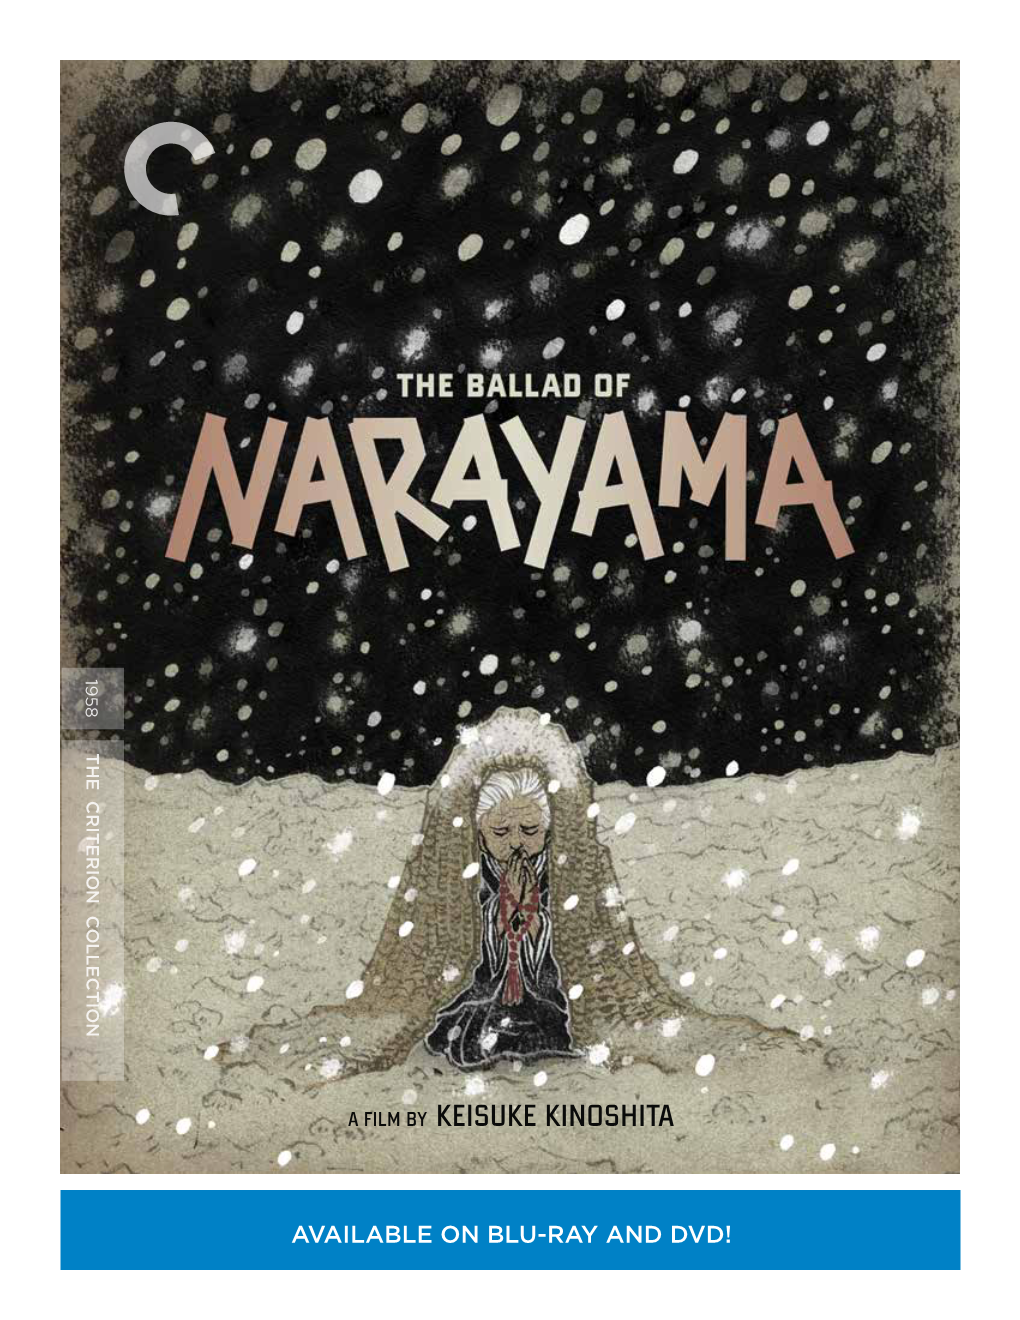 CRITERION COLLECTION PRESENTS the Ballad of Narayama